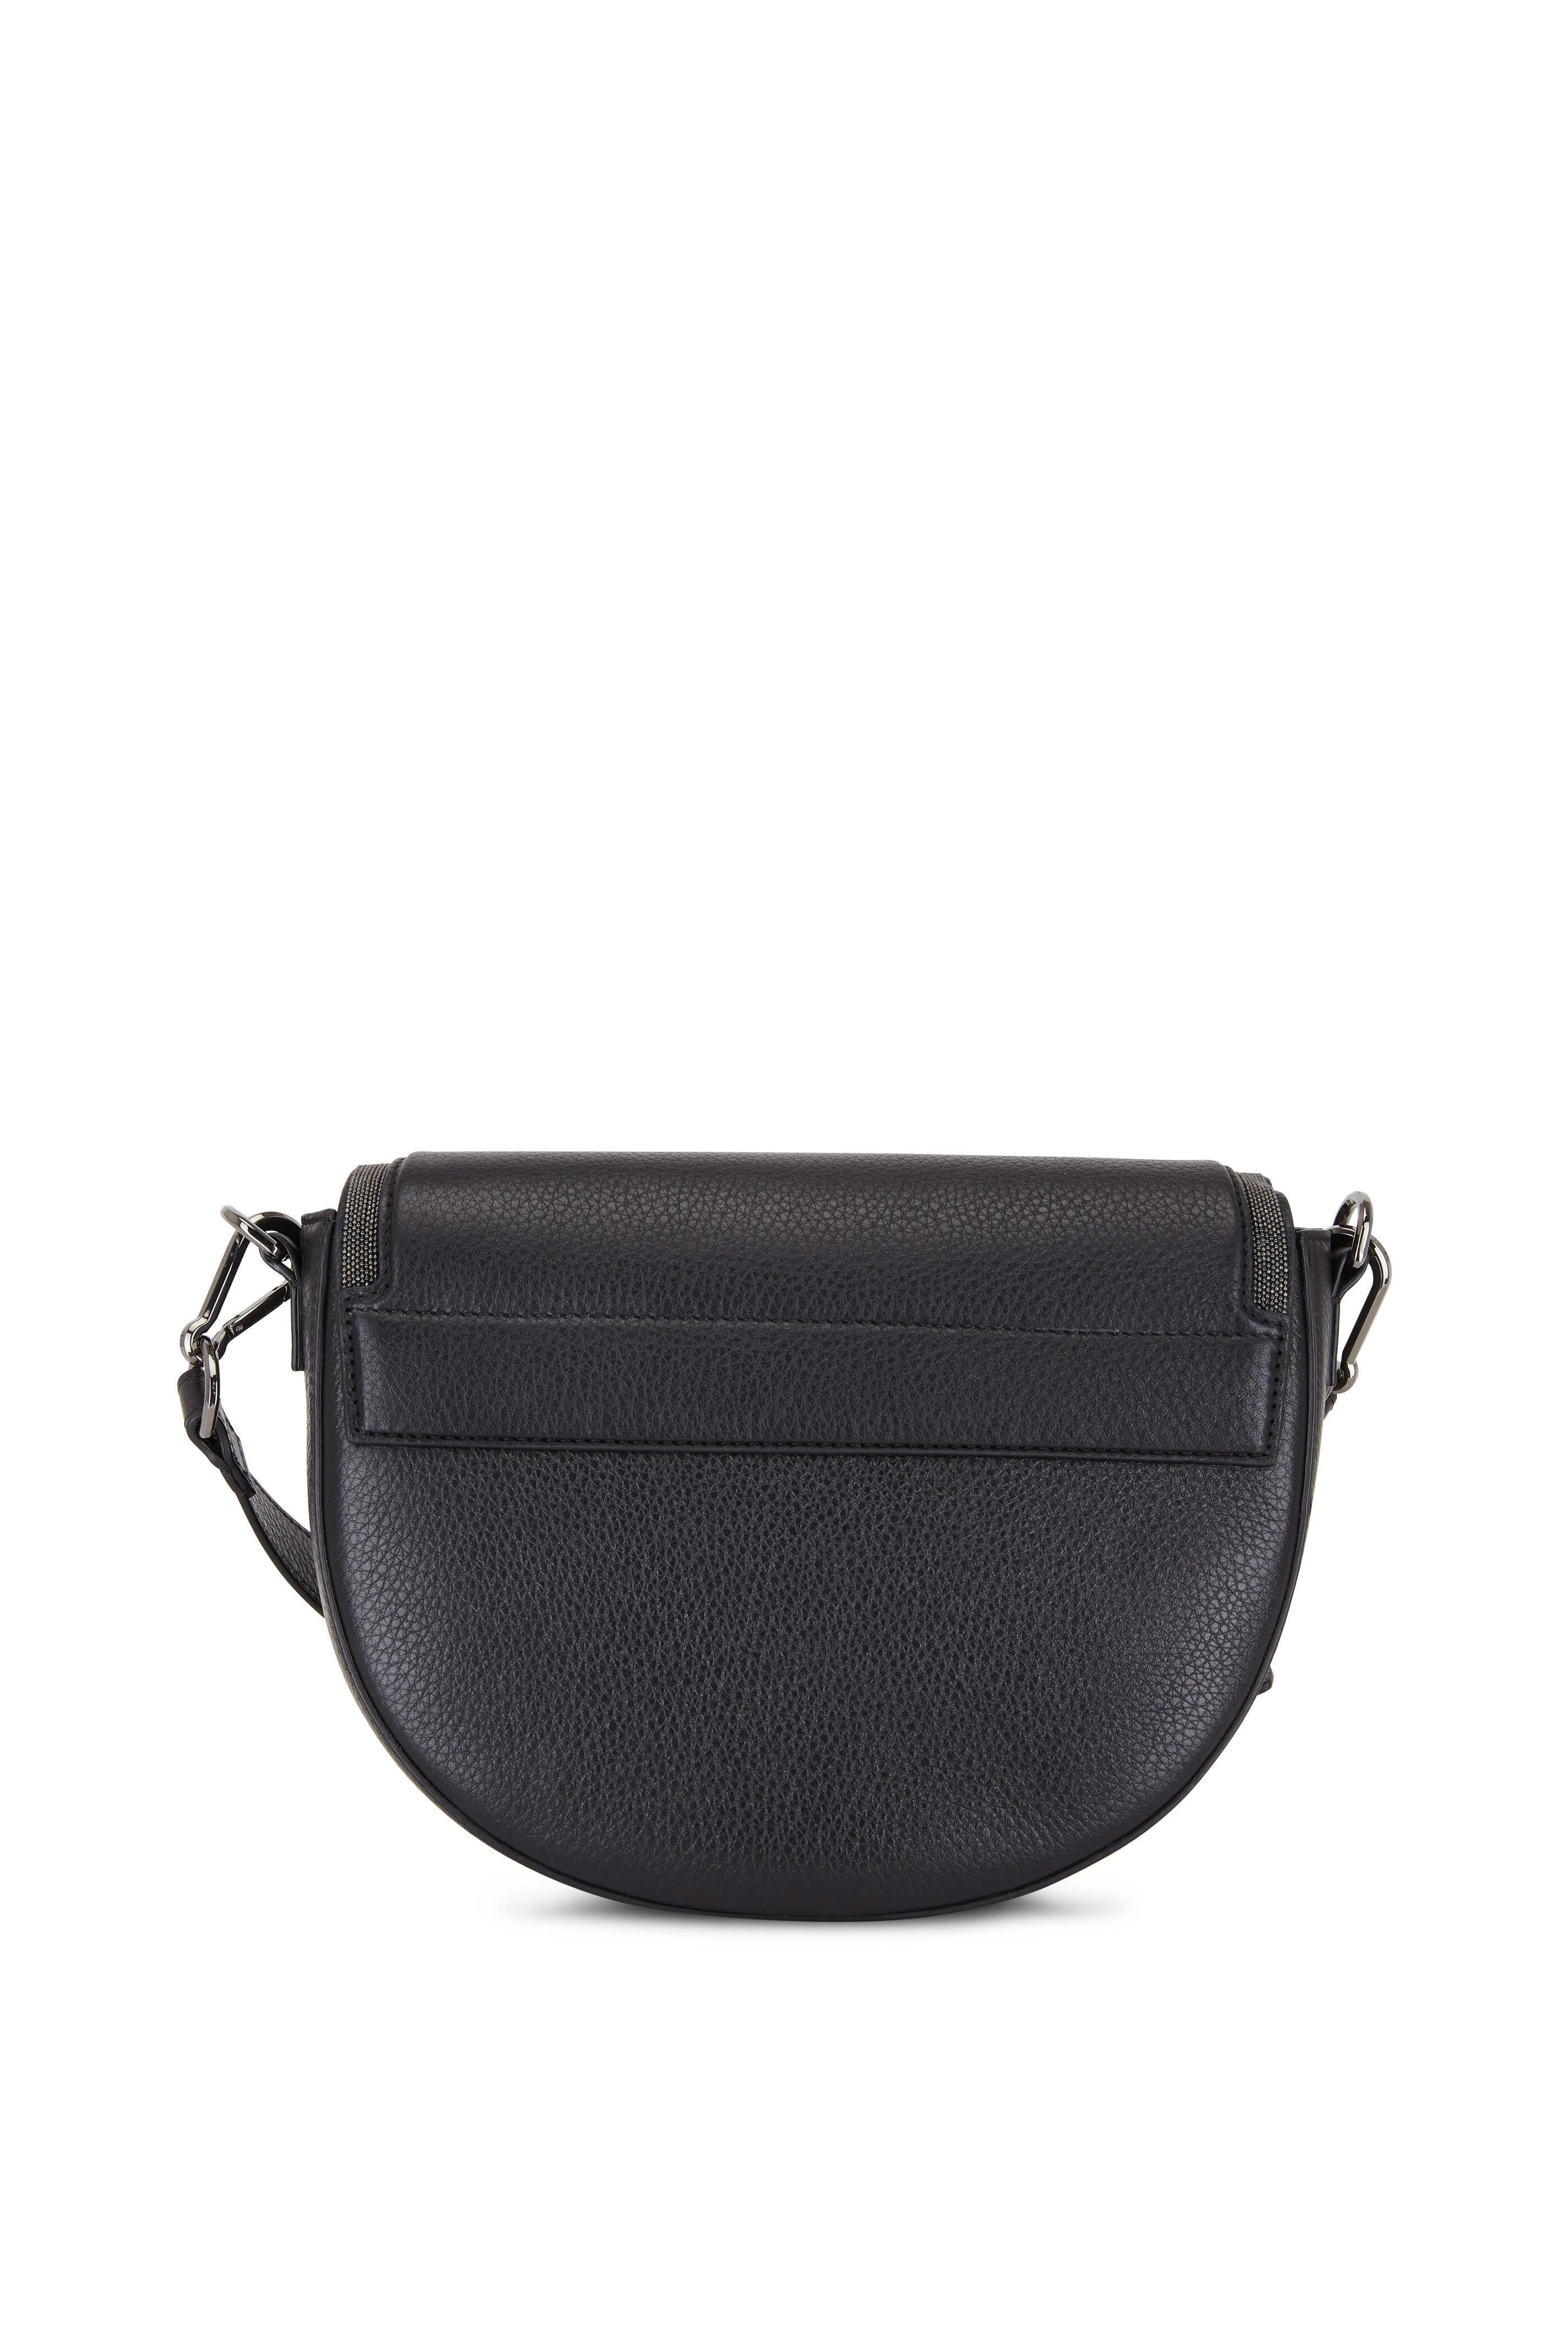 Polène | Bag - numéro UnMicro - Black Textured Leather